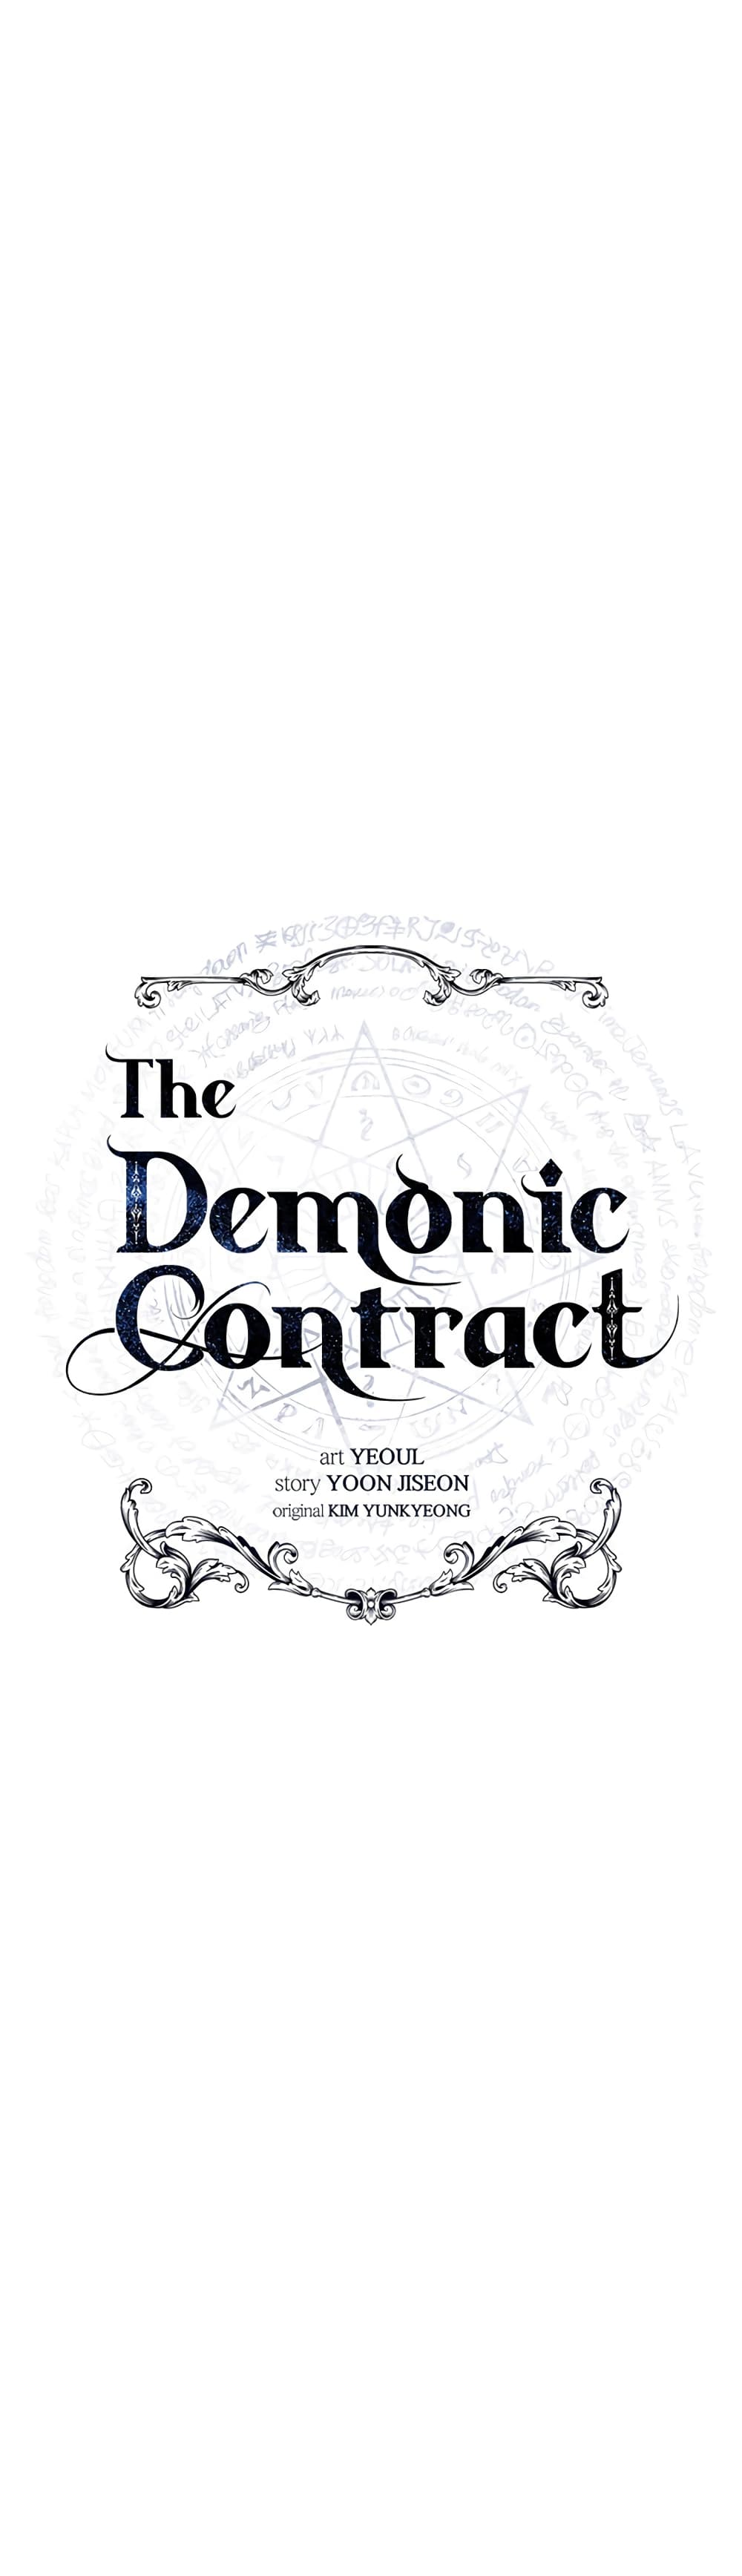 The Demonic Contract 46 (8)